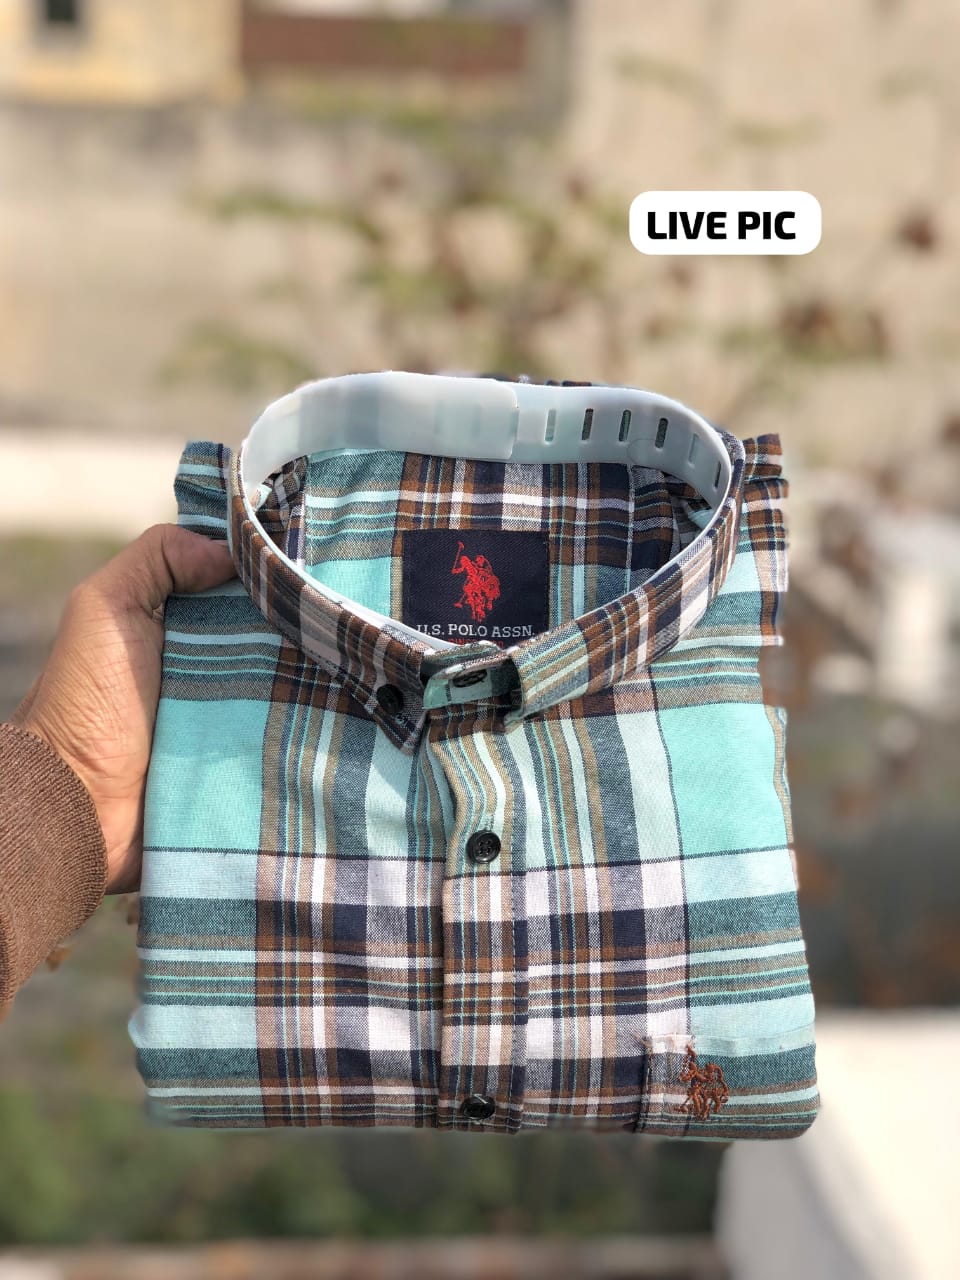 Premium quality SHIRTS Pure Cotton fabric Brand EMBROIDIERY at pocket Checks shirts